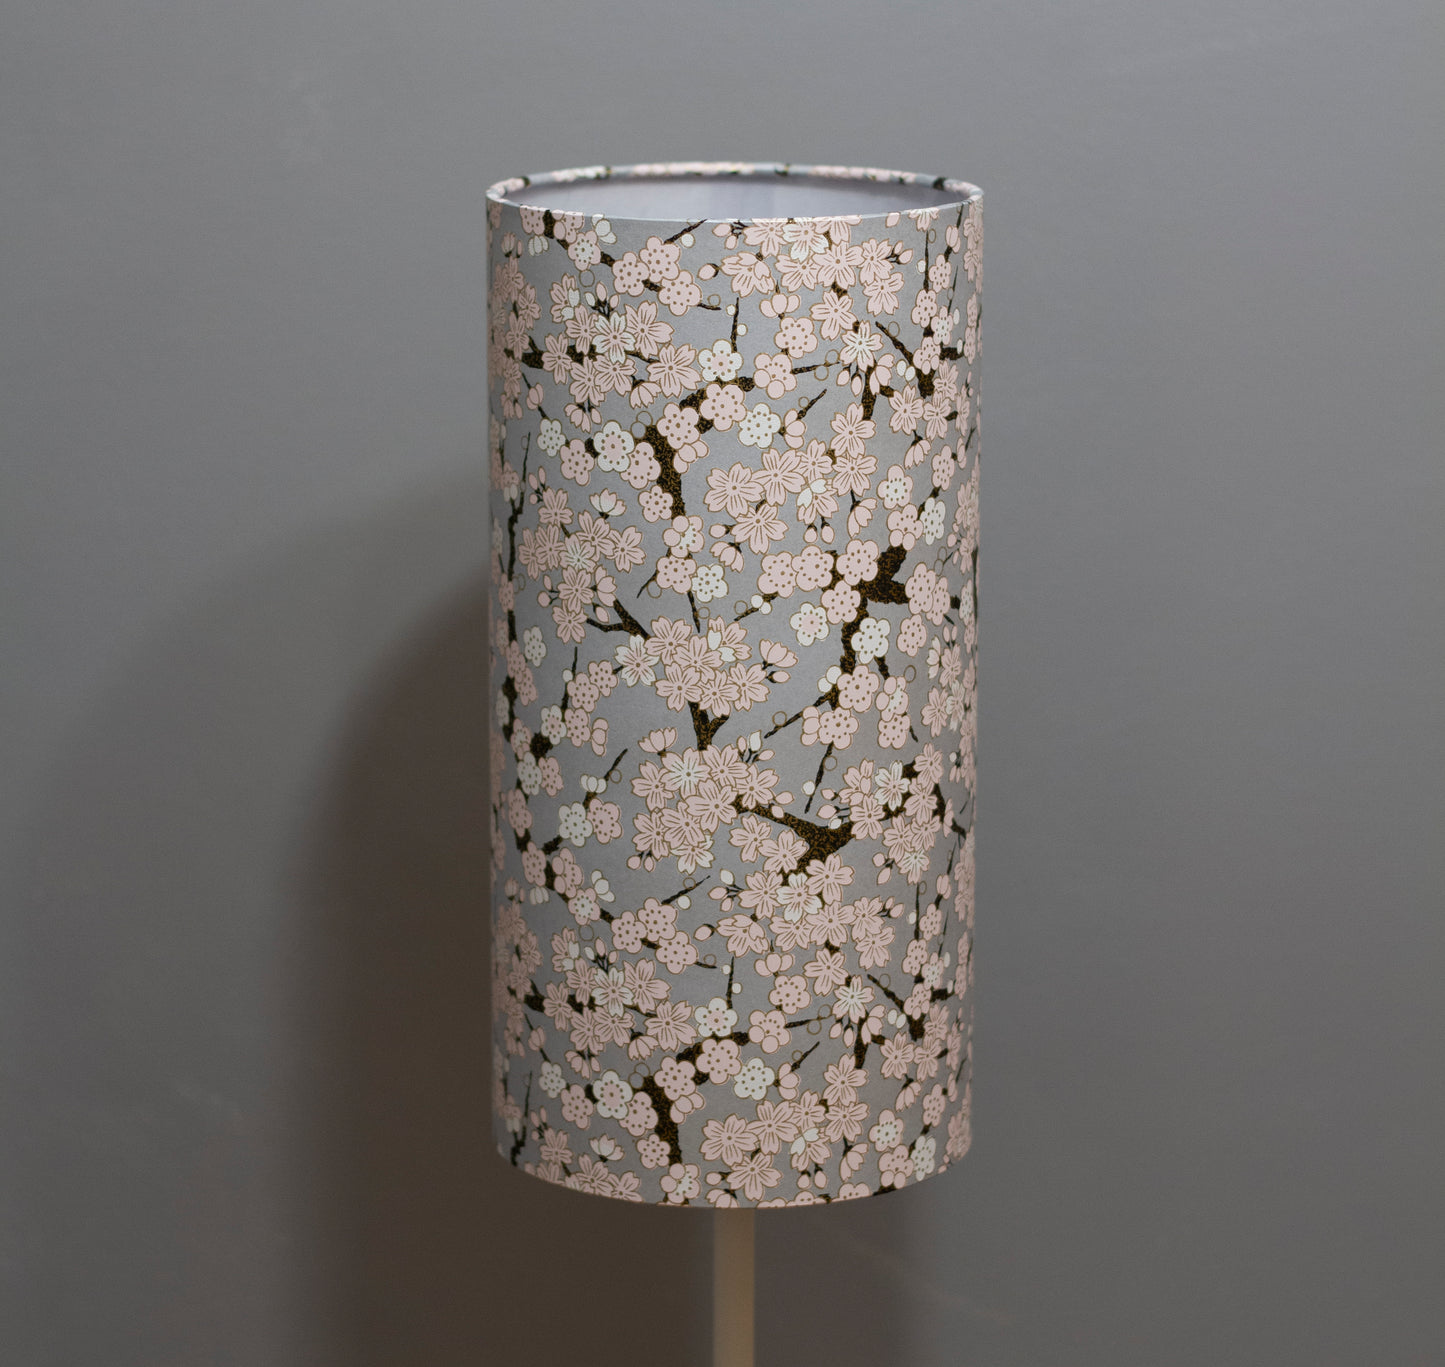 Drum Lamp Shade - W02 ~ Pink Cherry Blossom on Grey, 15cm(diameter)